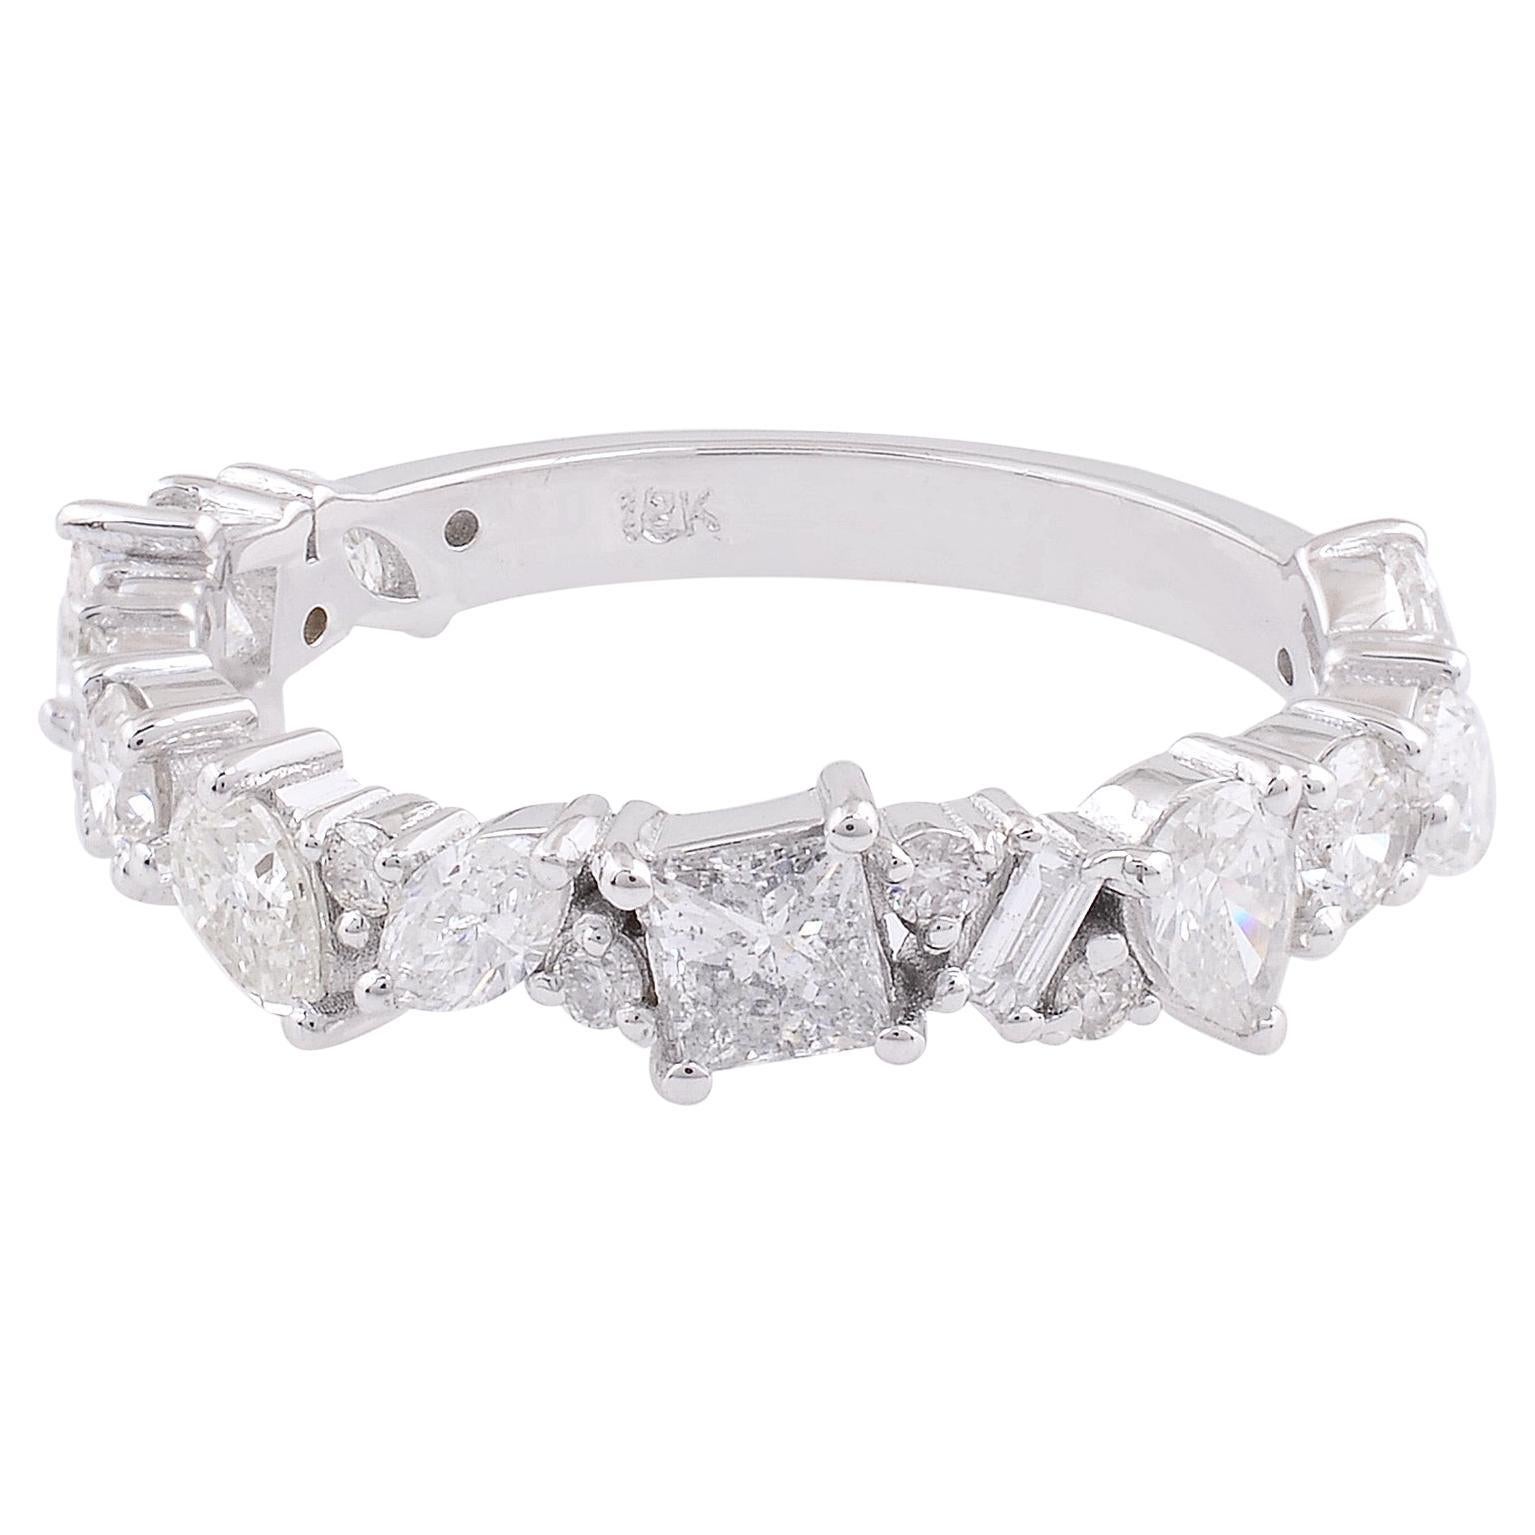 1.55 Carat SI Clarity HI Color Princess Cut Diamond Band Ring 18k White Gold